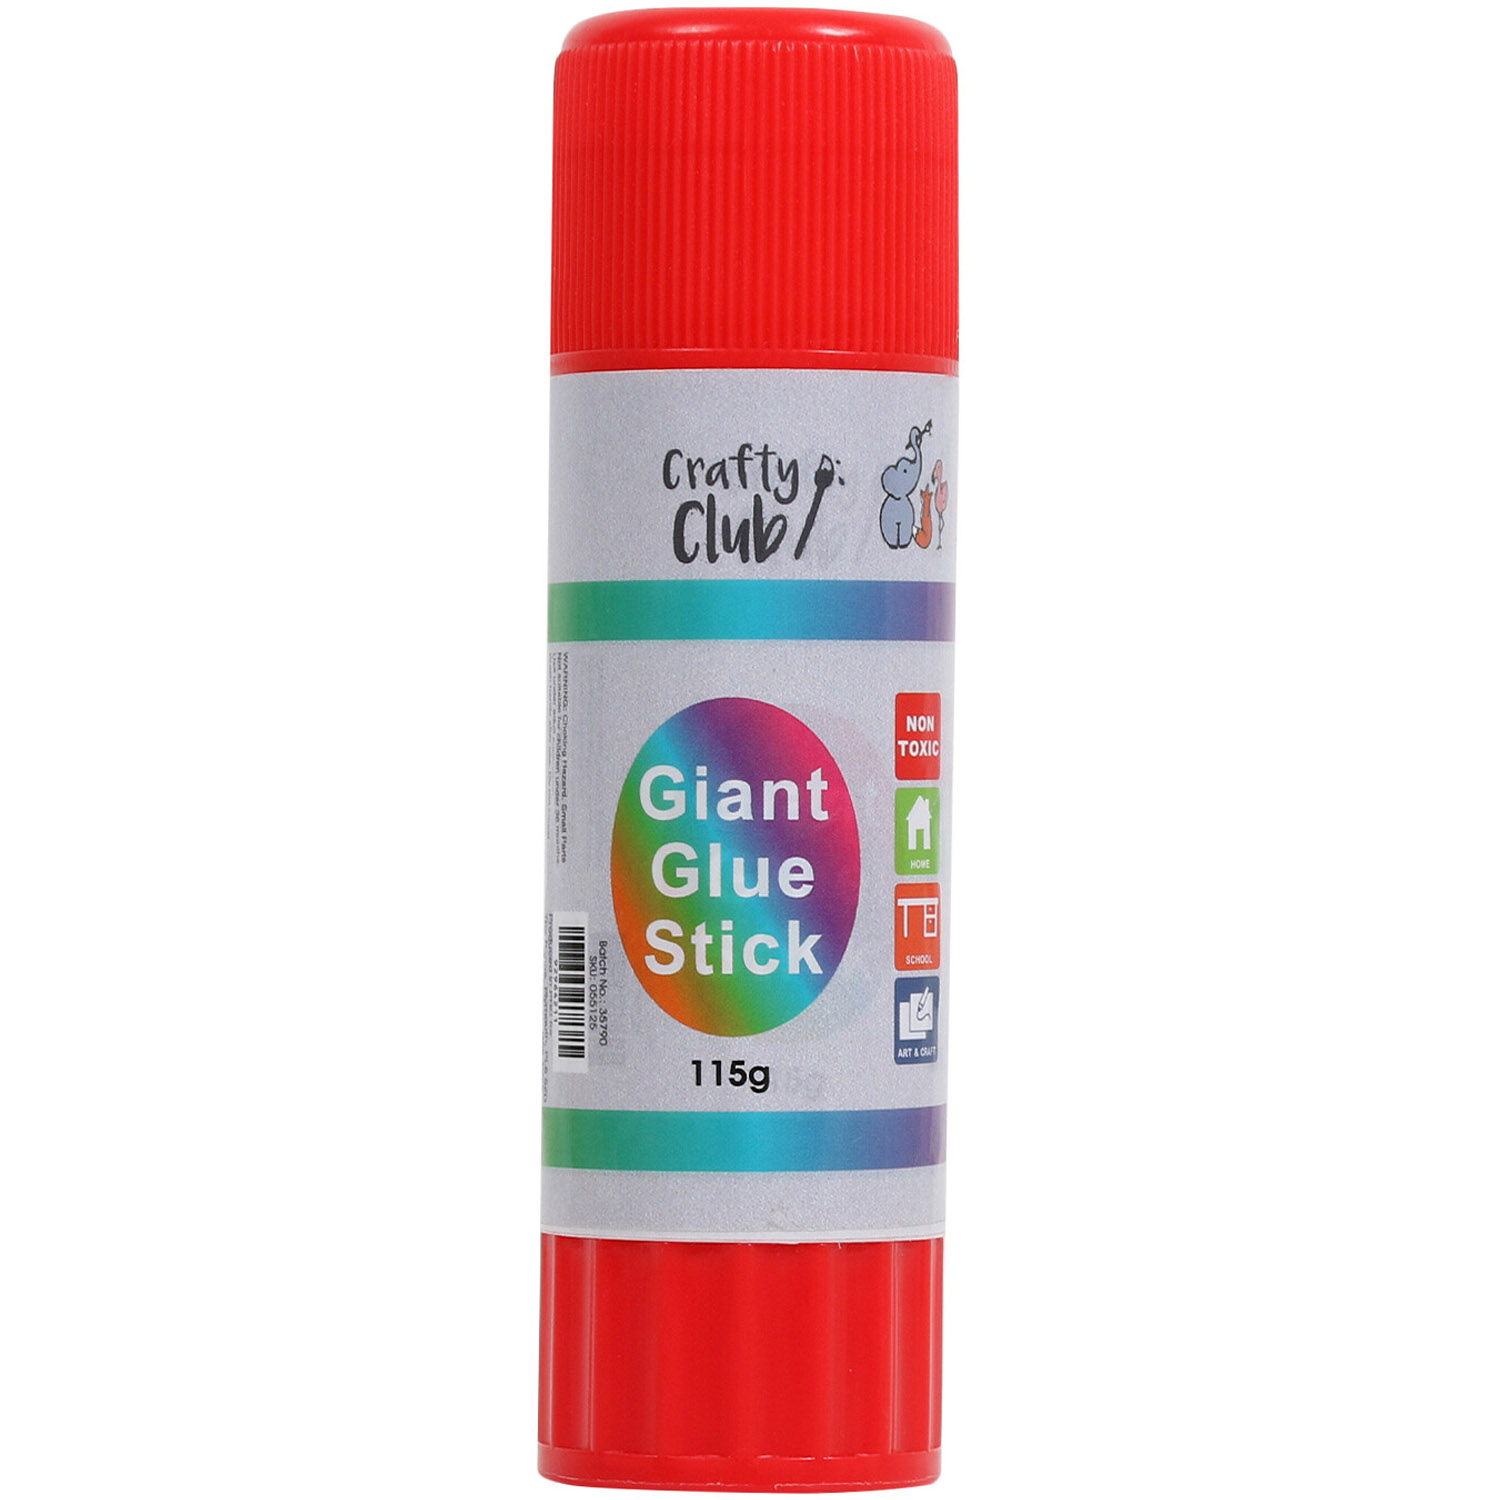 Crafty Club Giant Glue Stick Image